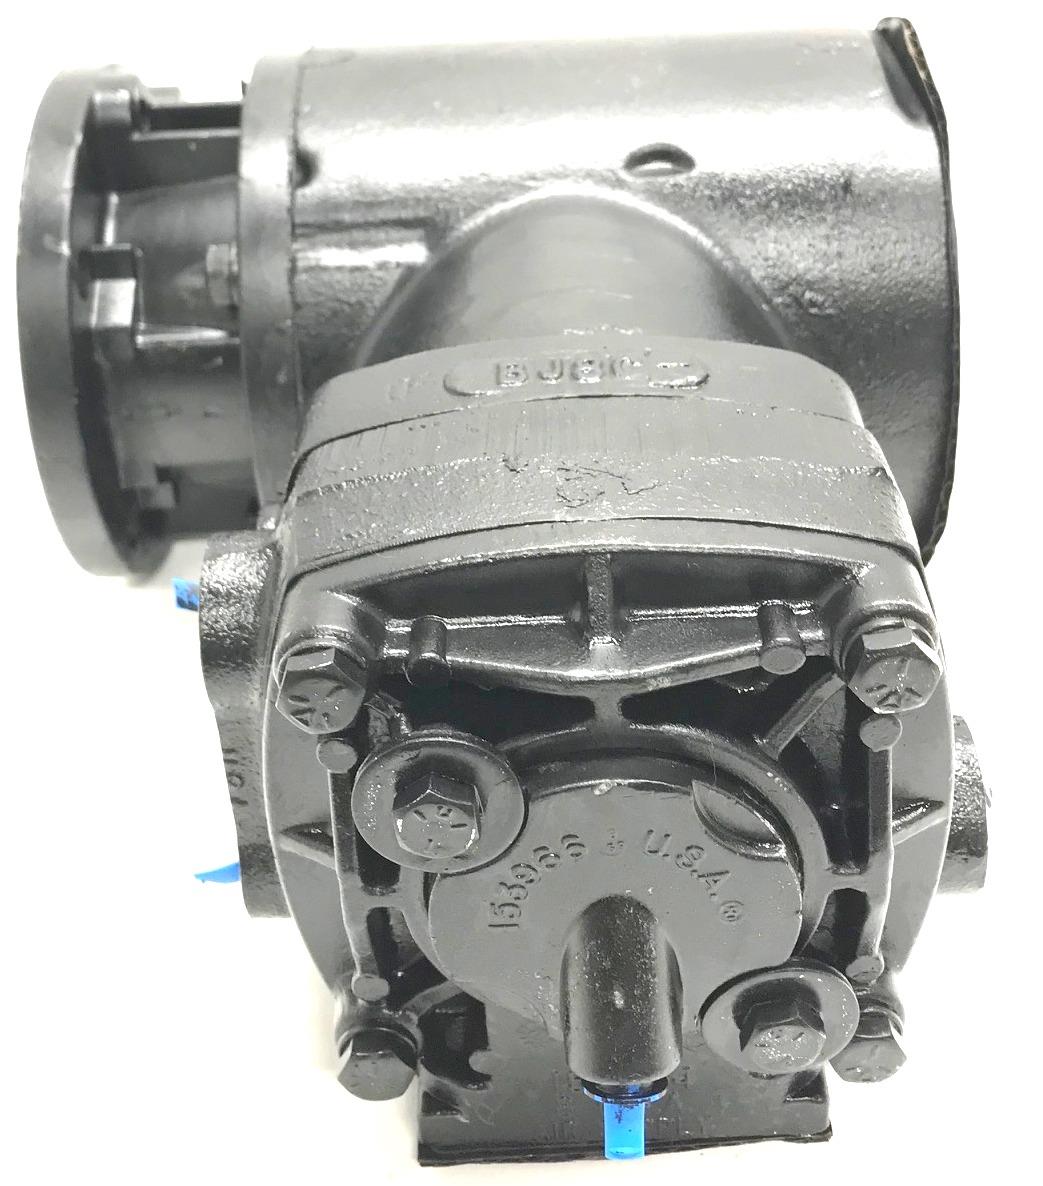 5T-674 | 5T-674  Air Compressor for Trucks with Cummins NHC 250 Diesel Engine (3).jpg